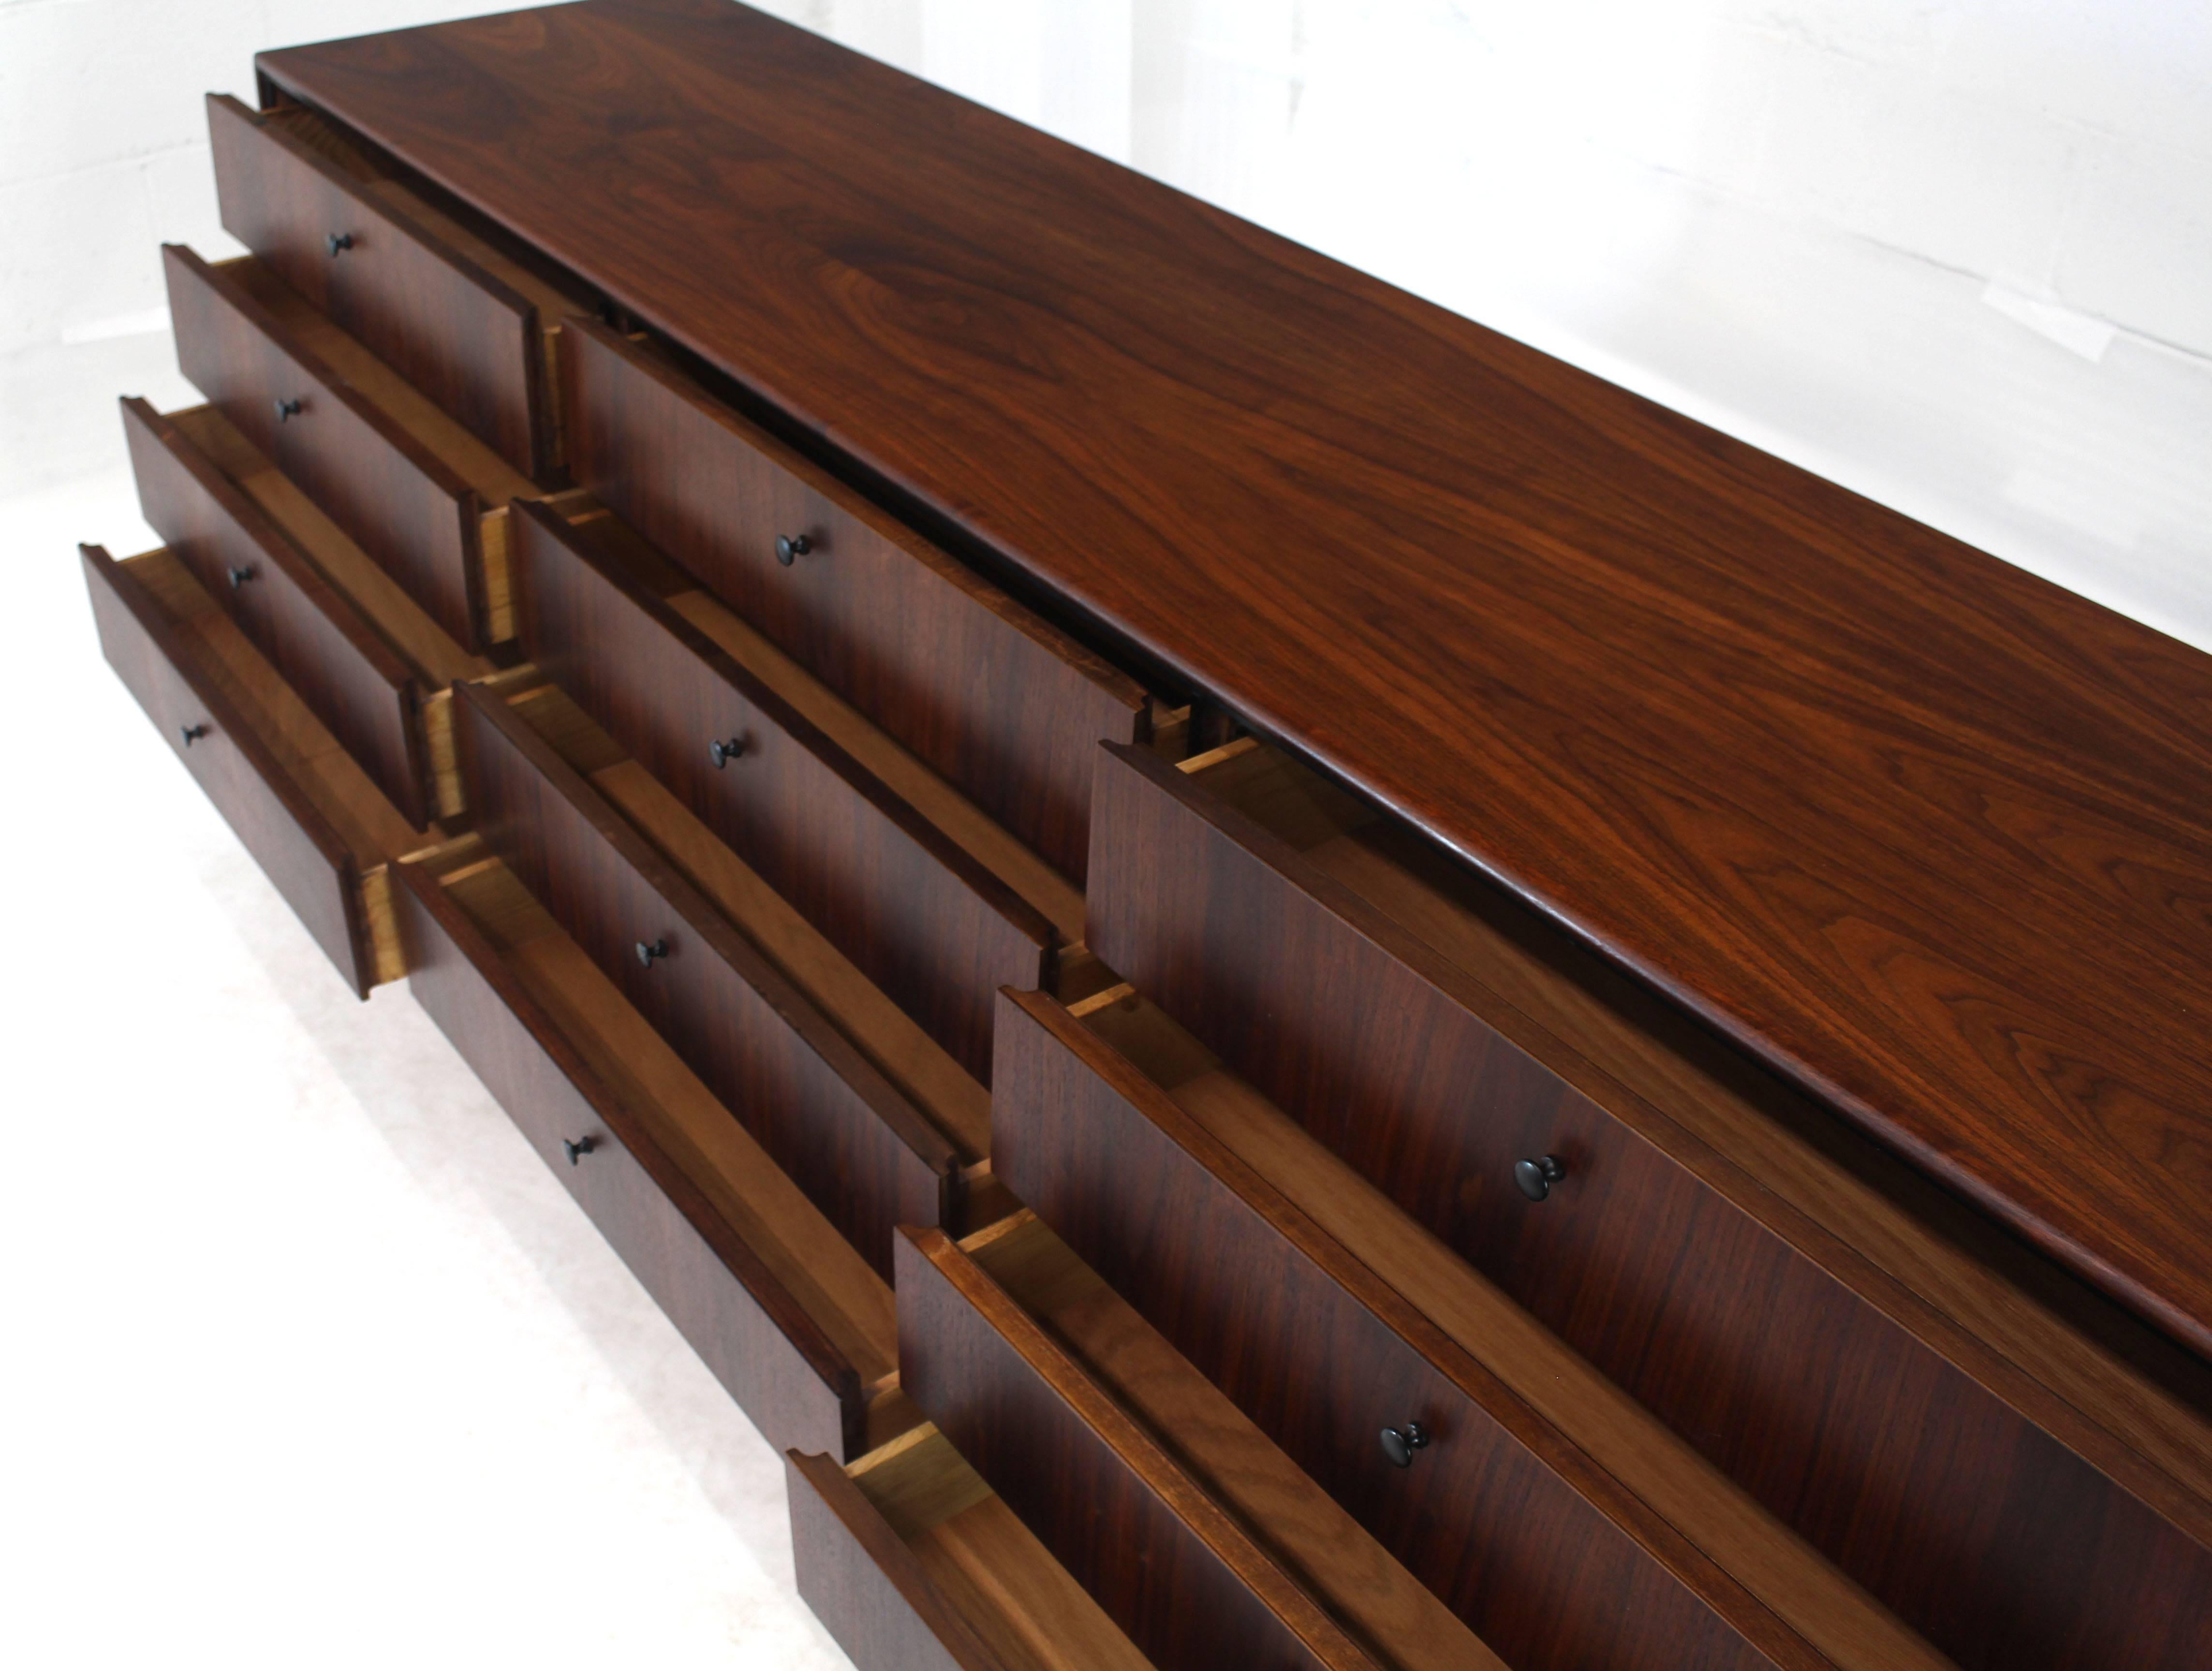 Vivid walnut grain patterns long mid century modern 12 drawers dresser credenza.